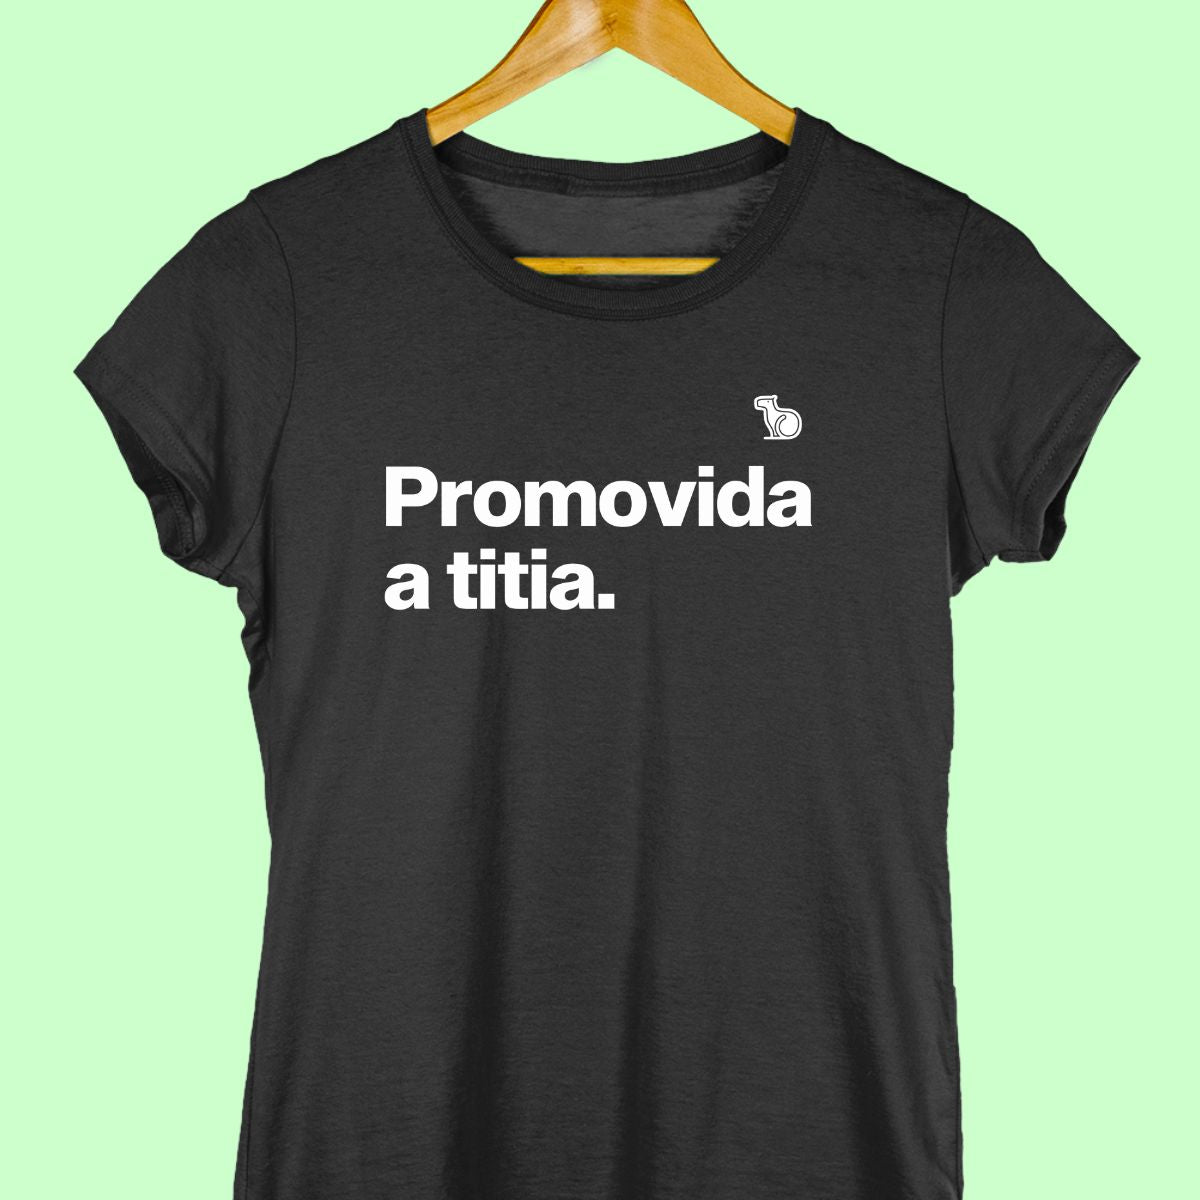 Camiseta com a frase "promovida a titia" feminina preta.